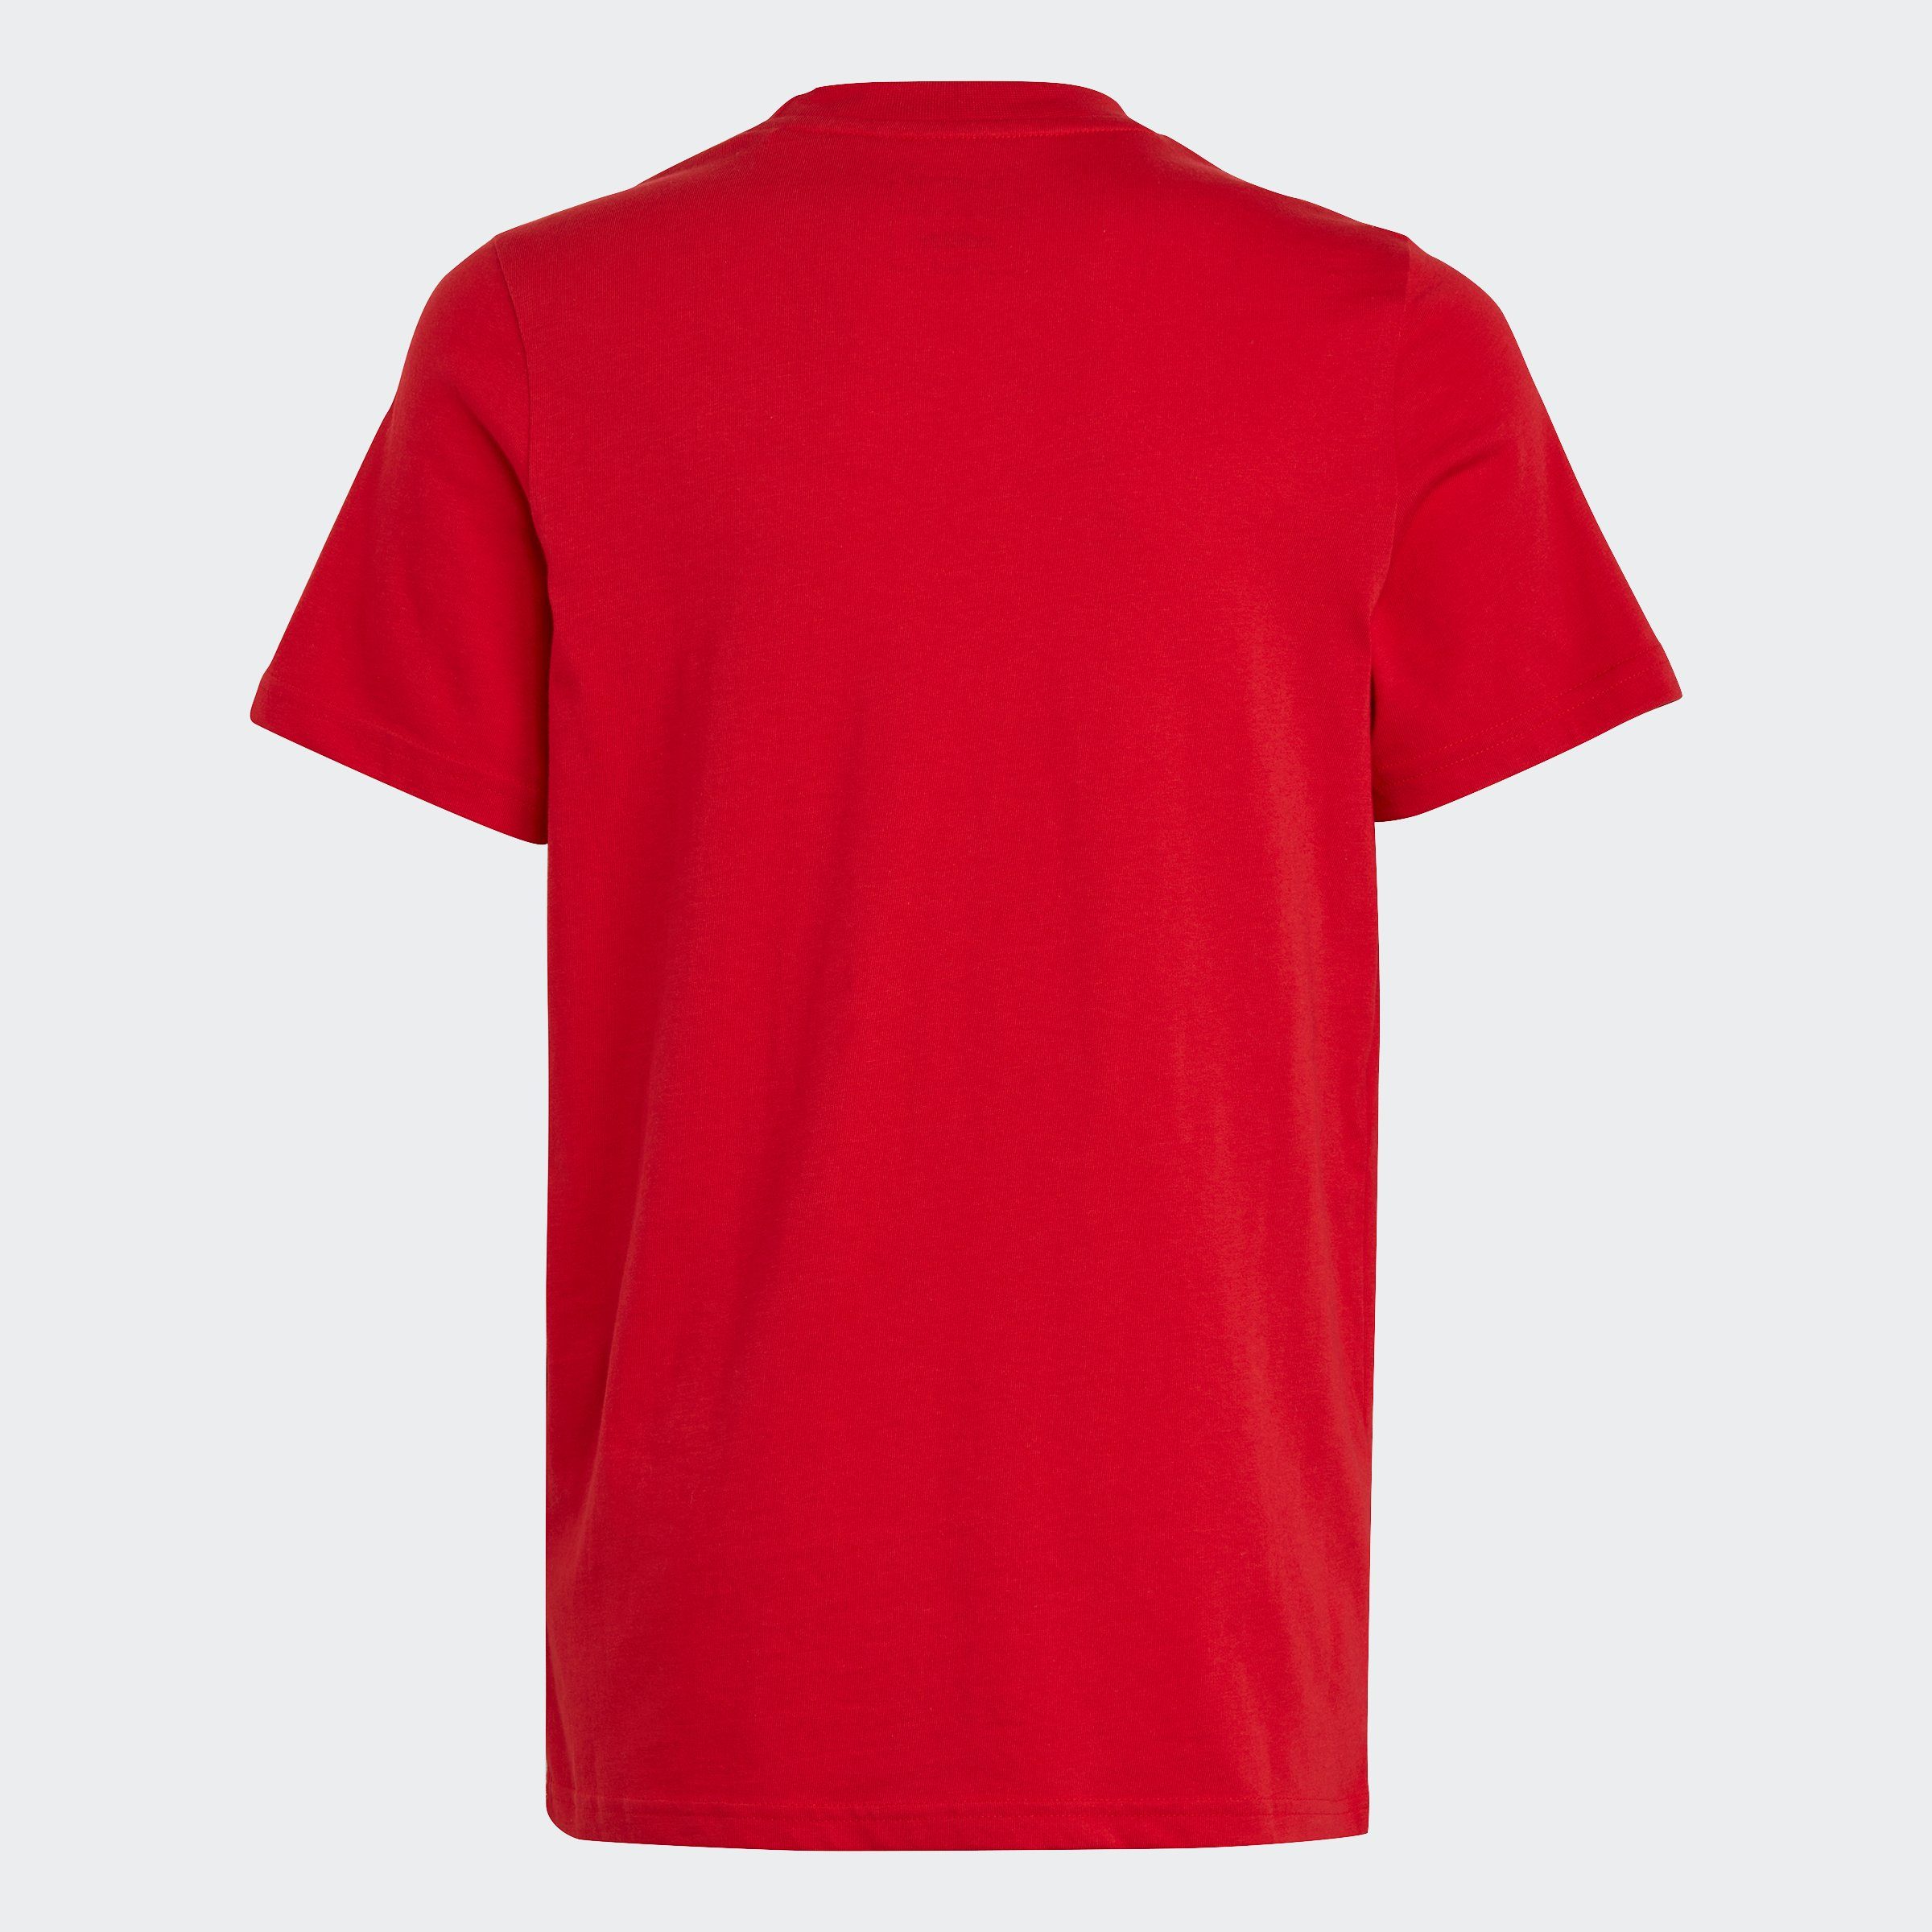 Better COTTON LOGO SMALL / Scarlet White T-Shirt adidas ESSENTIALS Sportswear